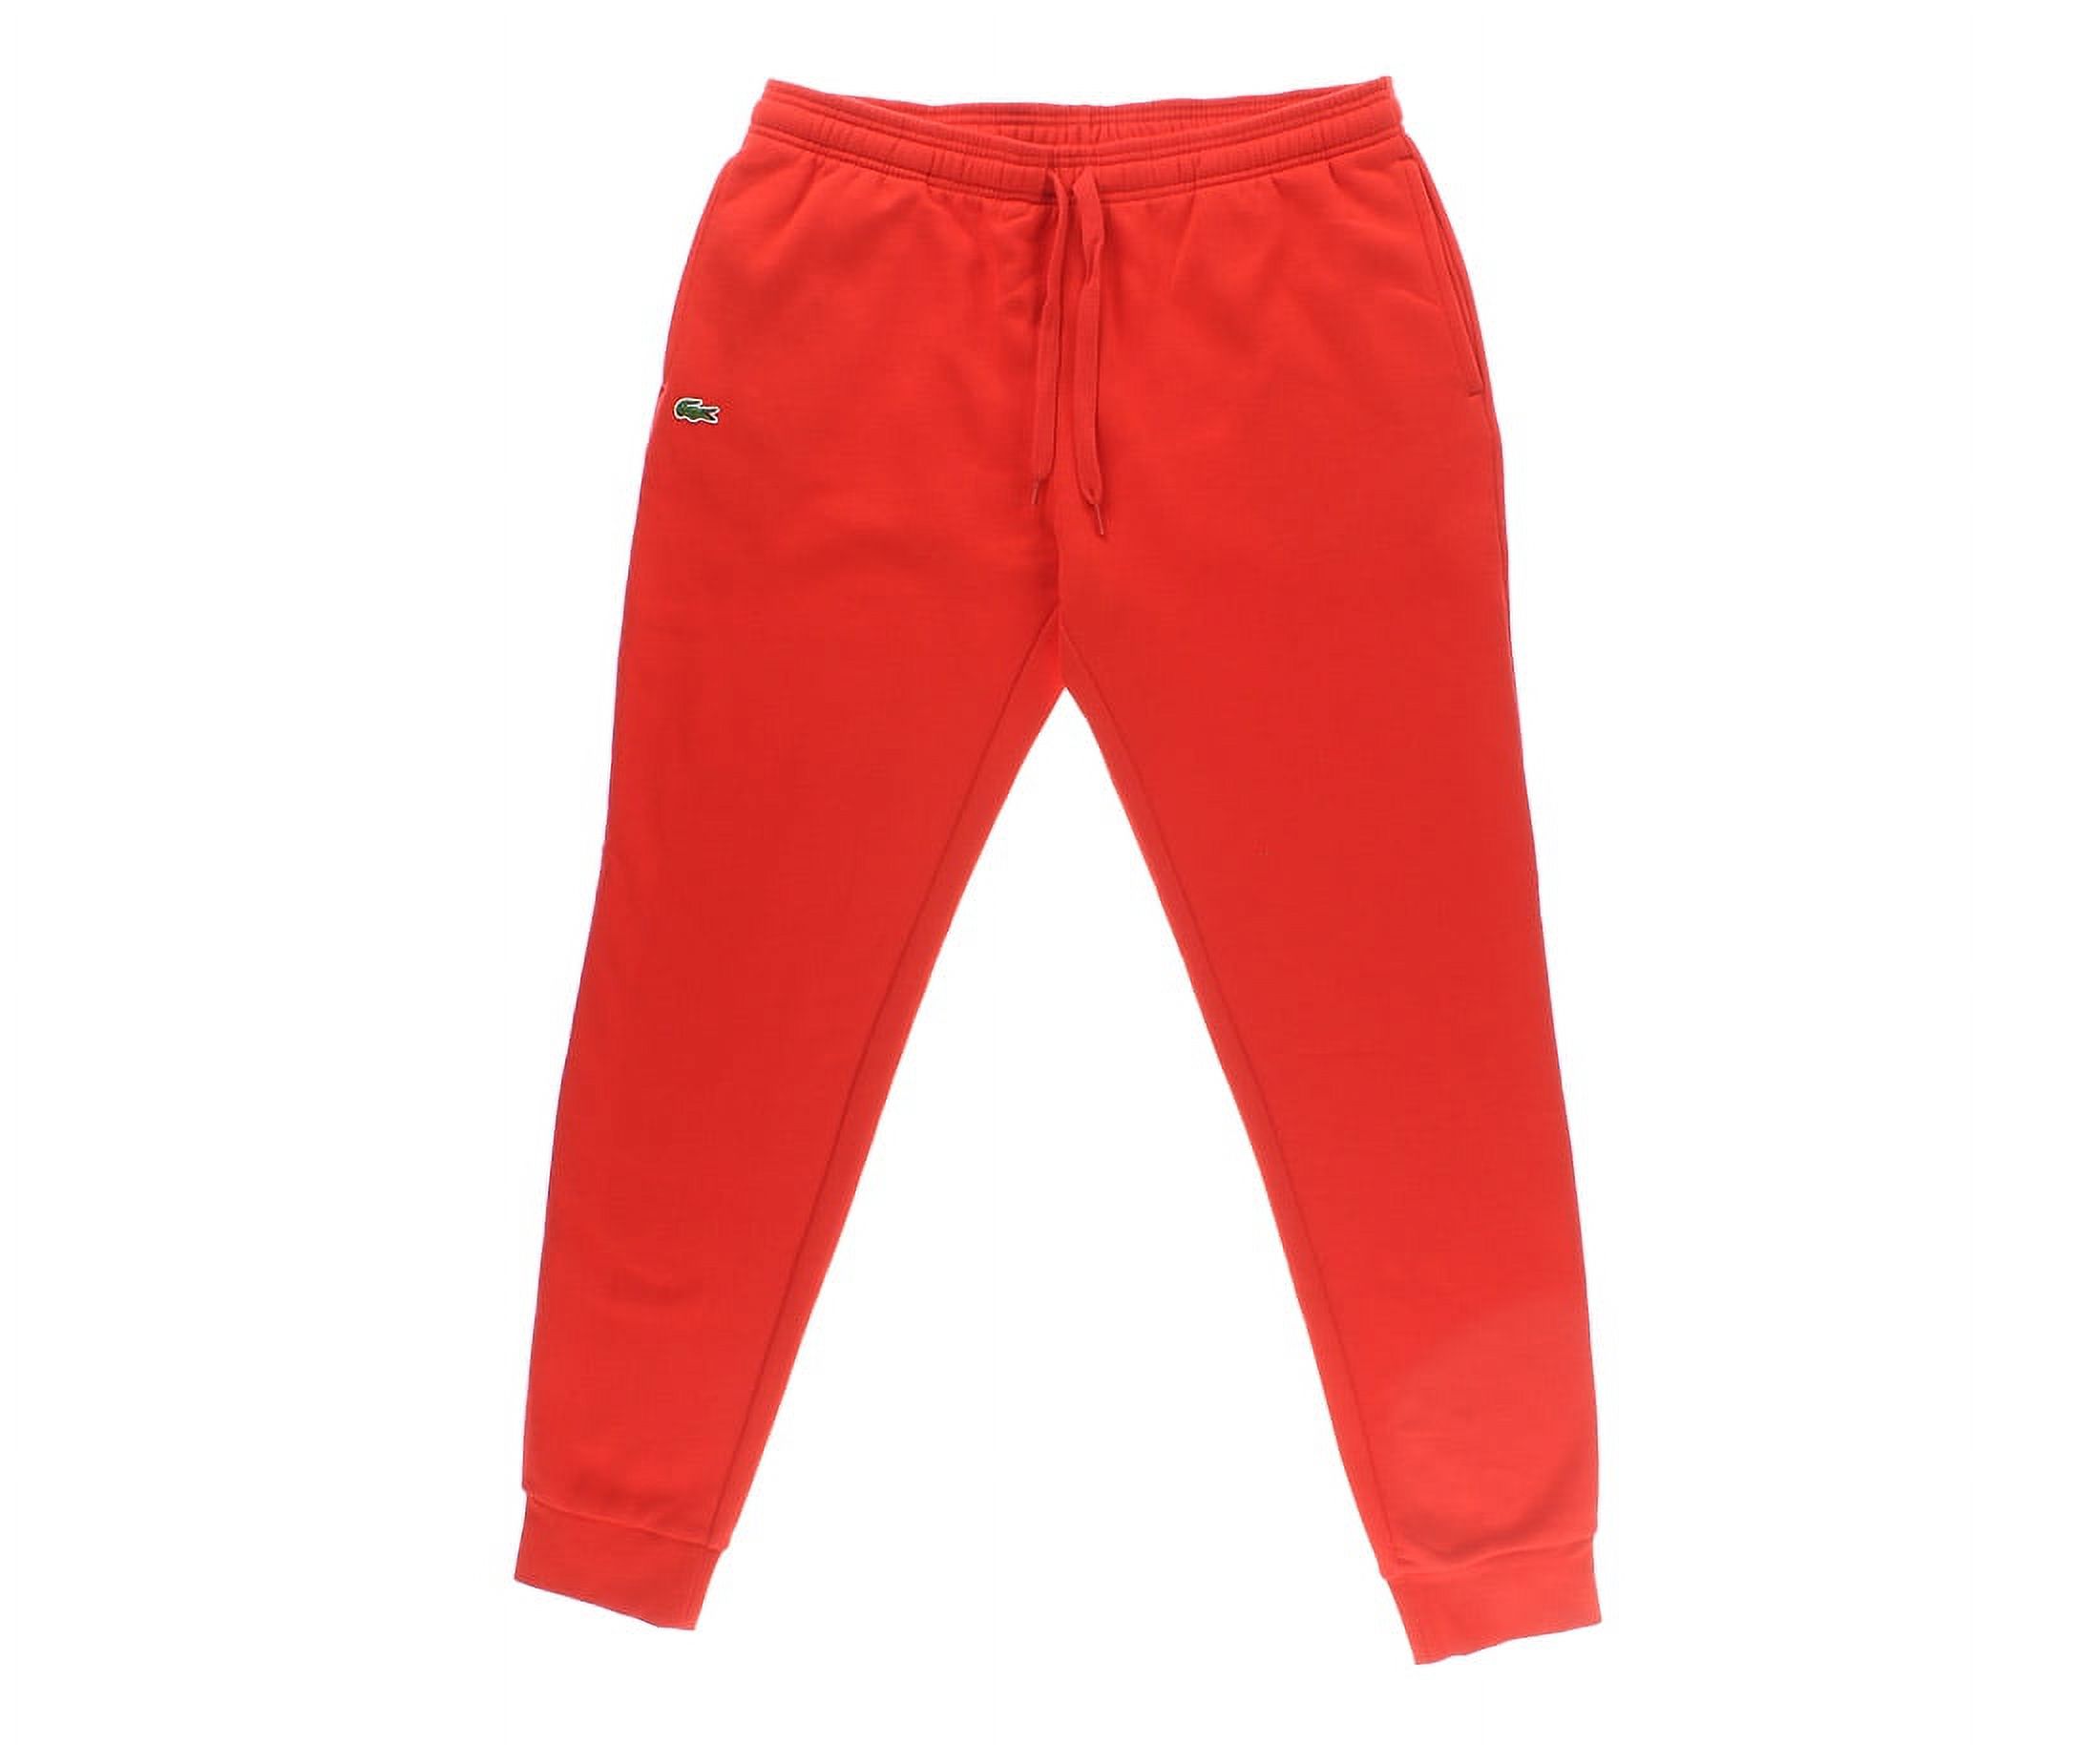 Lacoste Sport Fleece Jogger Mens Active Pants Size Xl, Color: Red - image 1 of 2